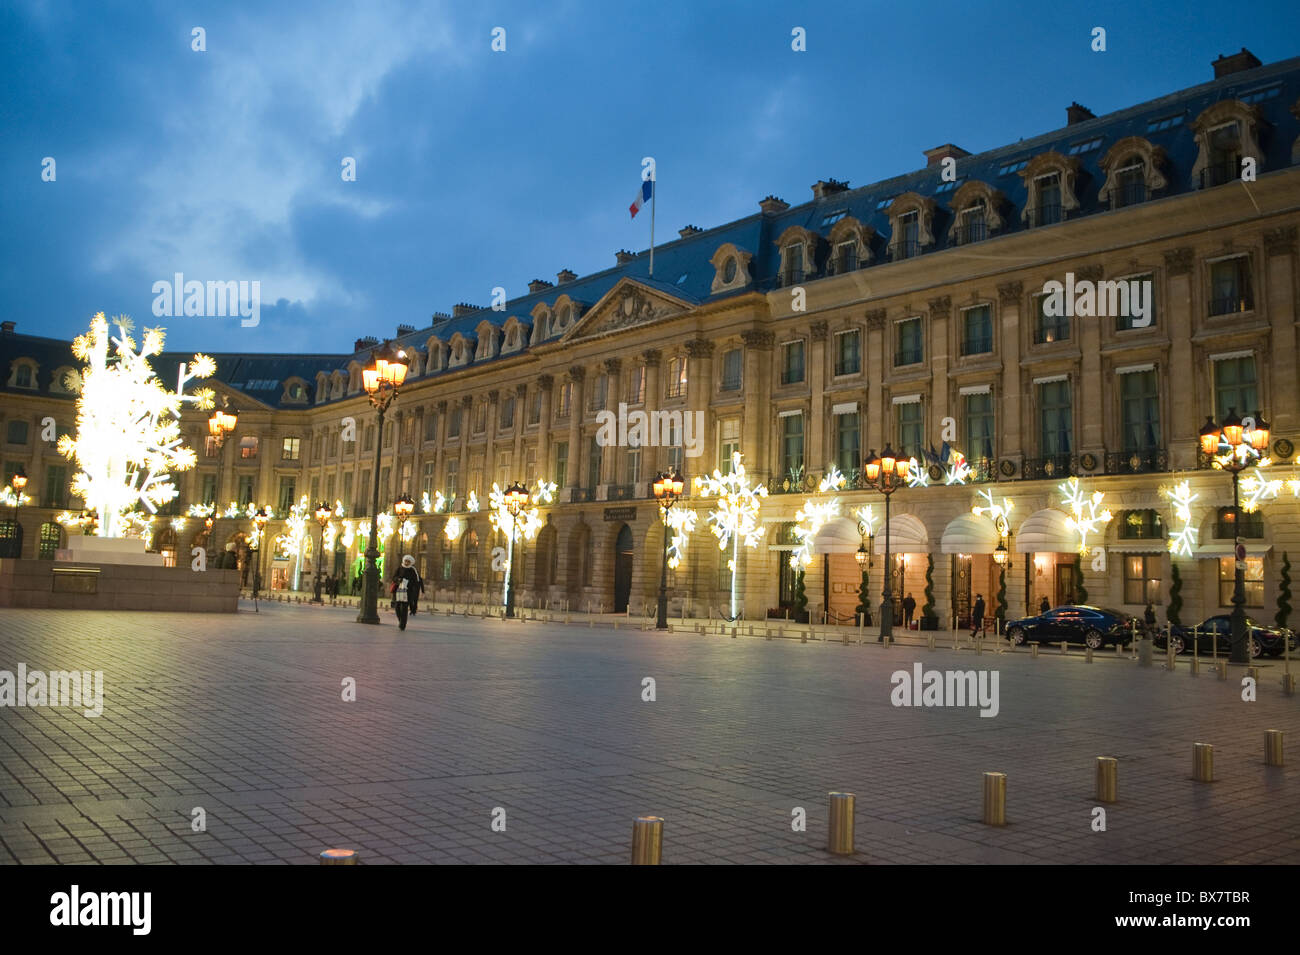 Hotel Ritz Paris Images – Browse 81 Stock Photos, Vectors, and Video